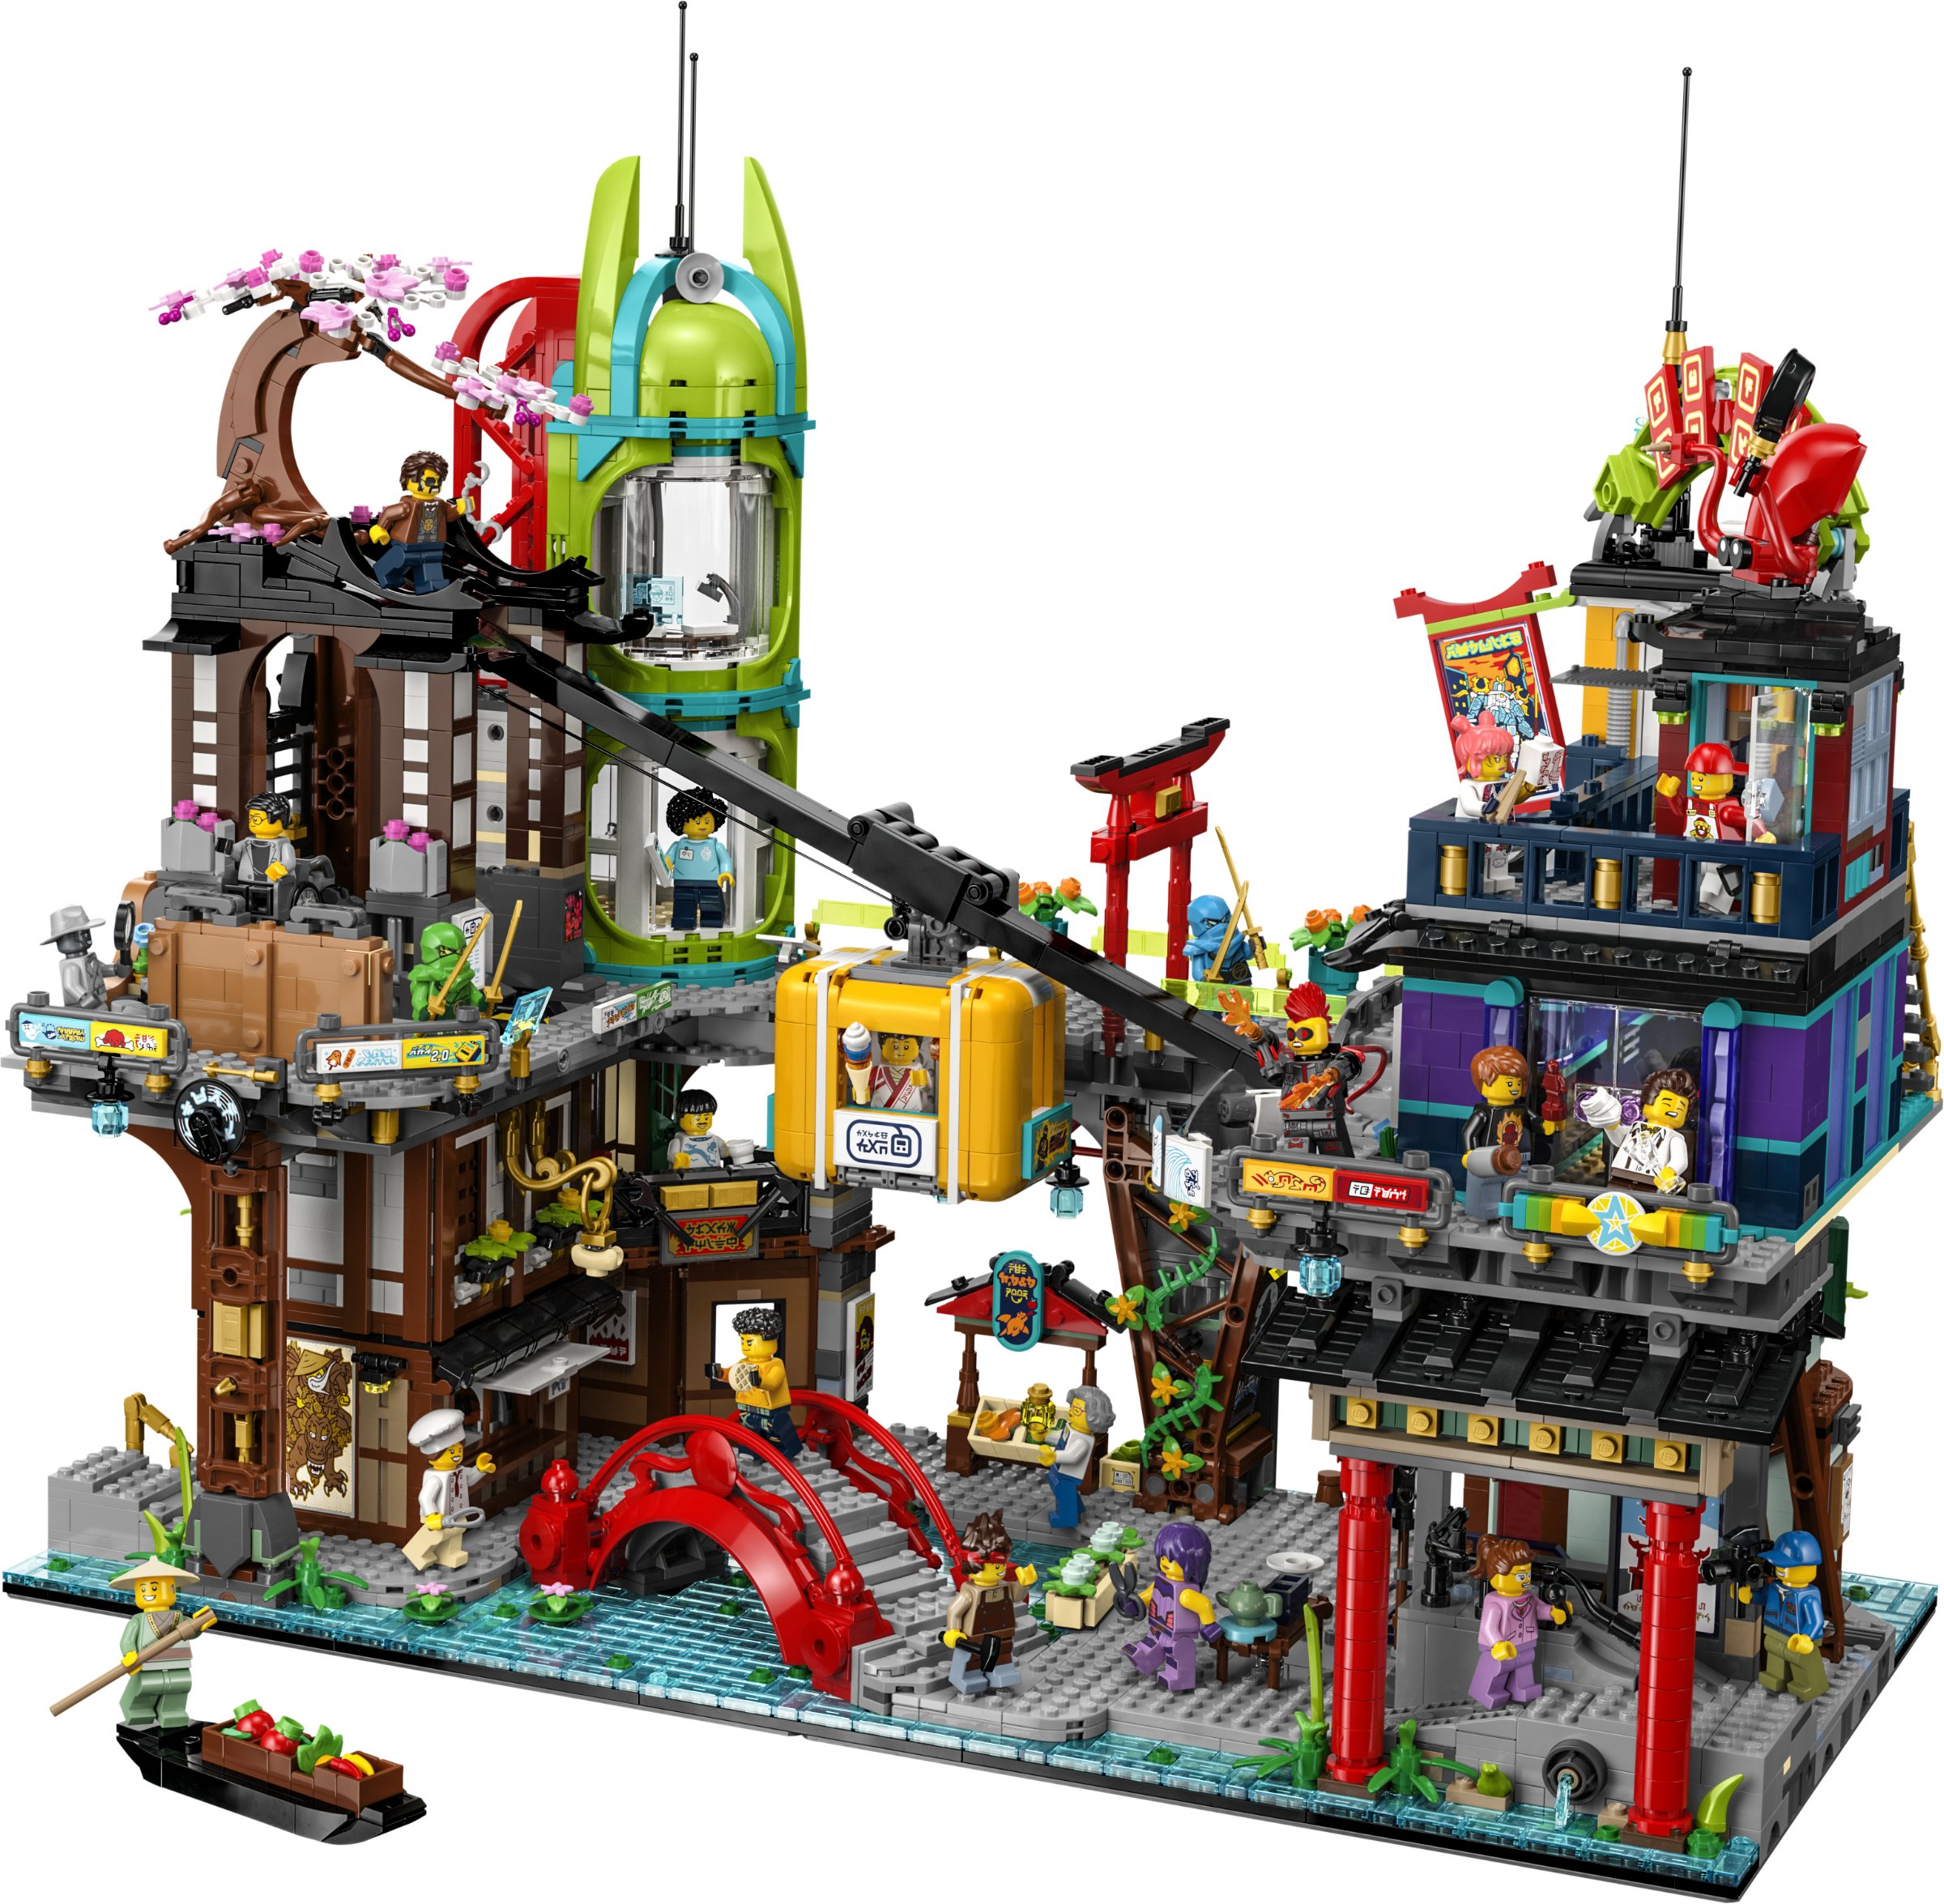 home page | Brickset: LEGO guide database